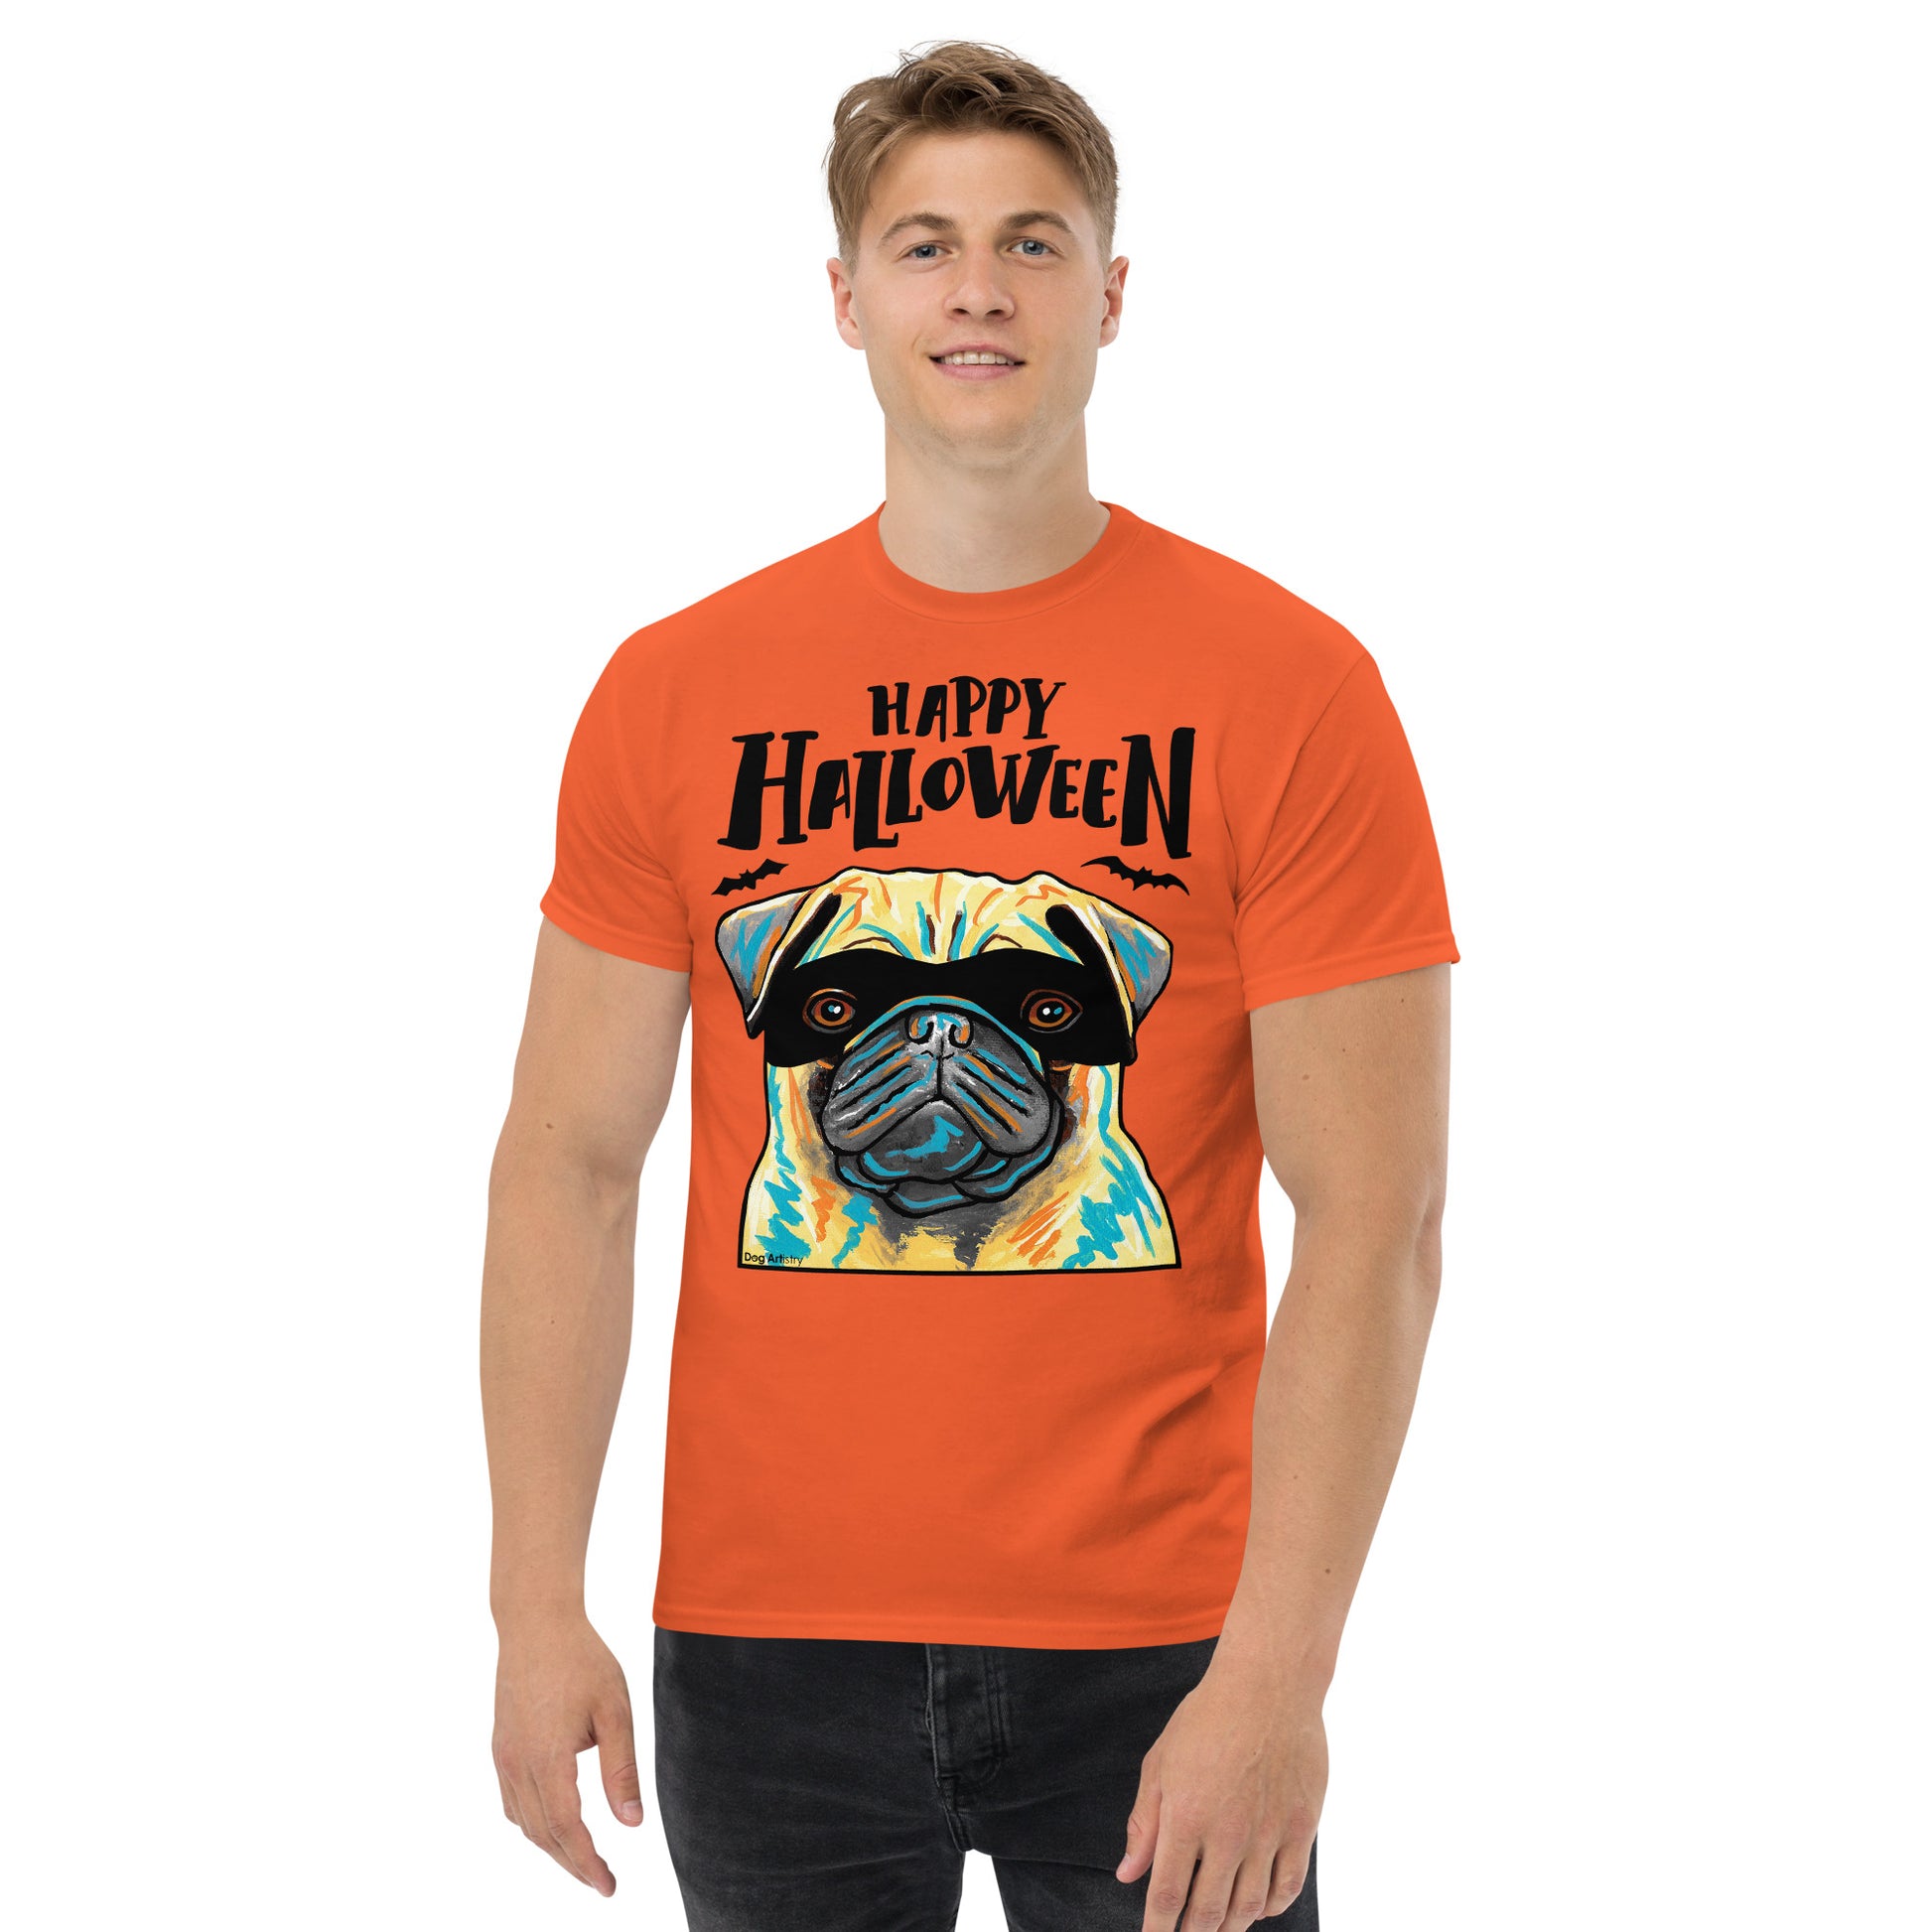 Funny Happy Halloween  Pug wearing mask men’s orange t-shirt by Dog Artistry.